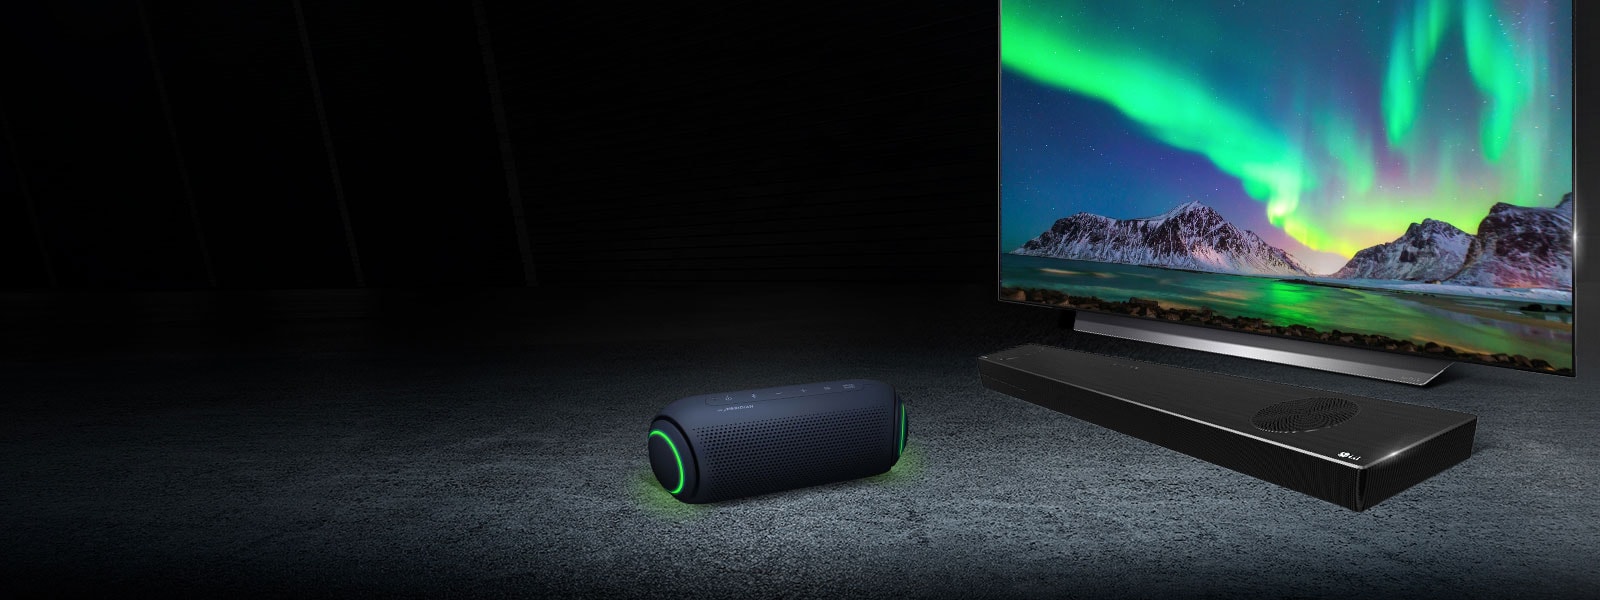 XBOOM speaker next to LG OLED TV and sound bar